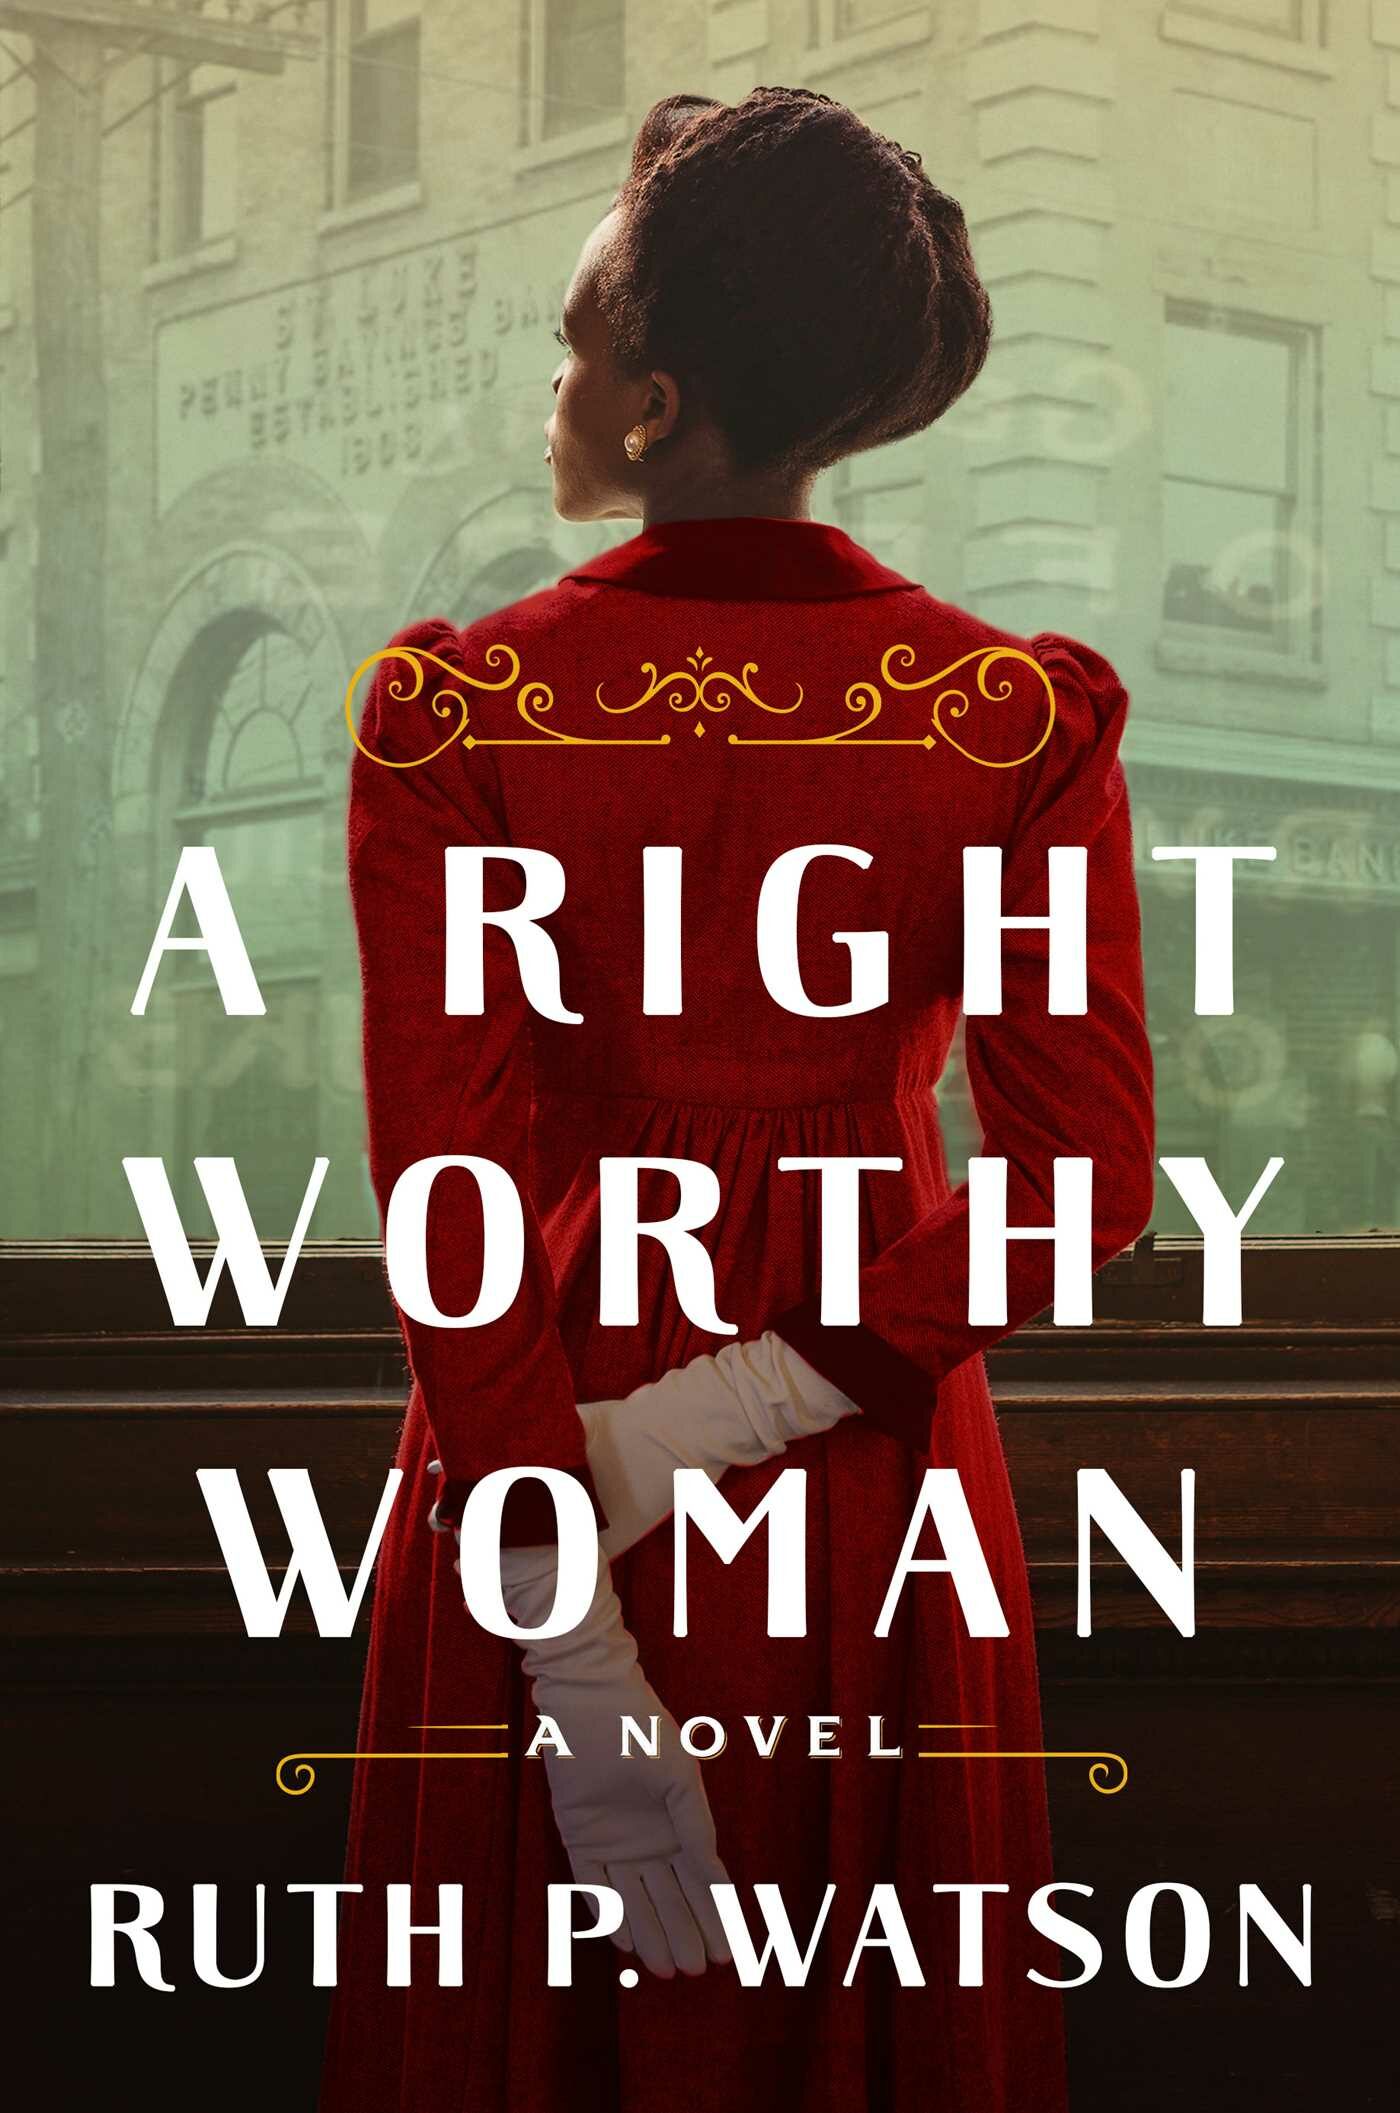 A Right Worthy Woman Ruth P. Watson